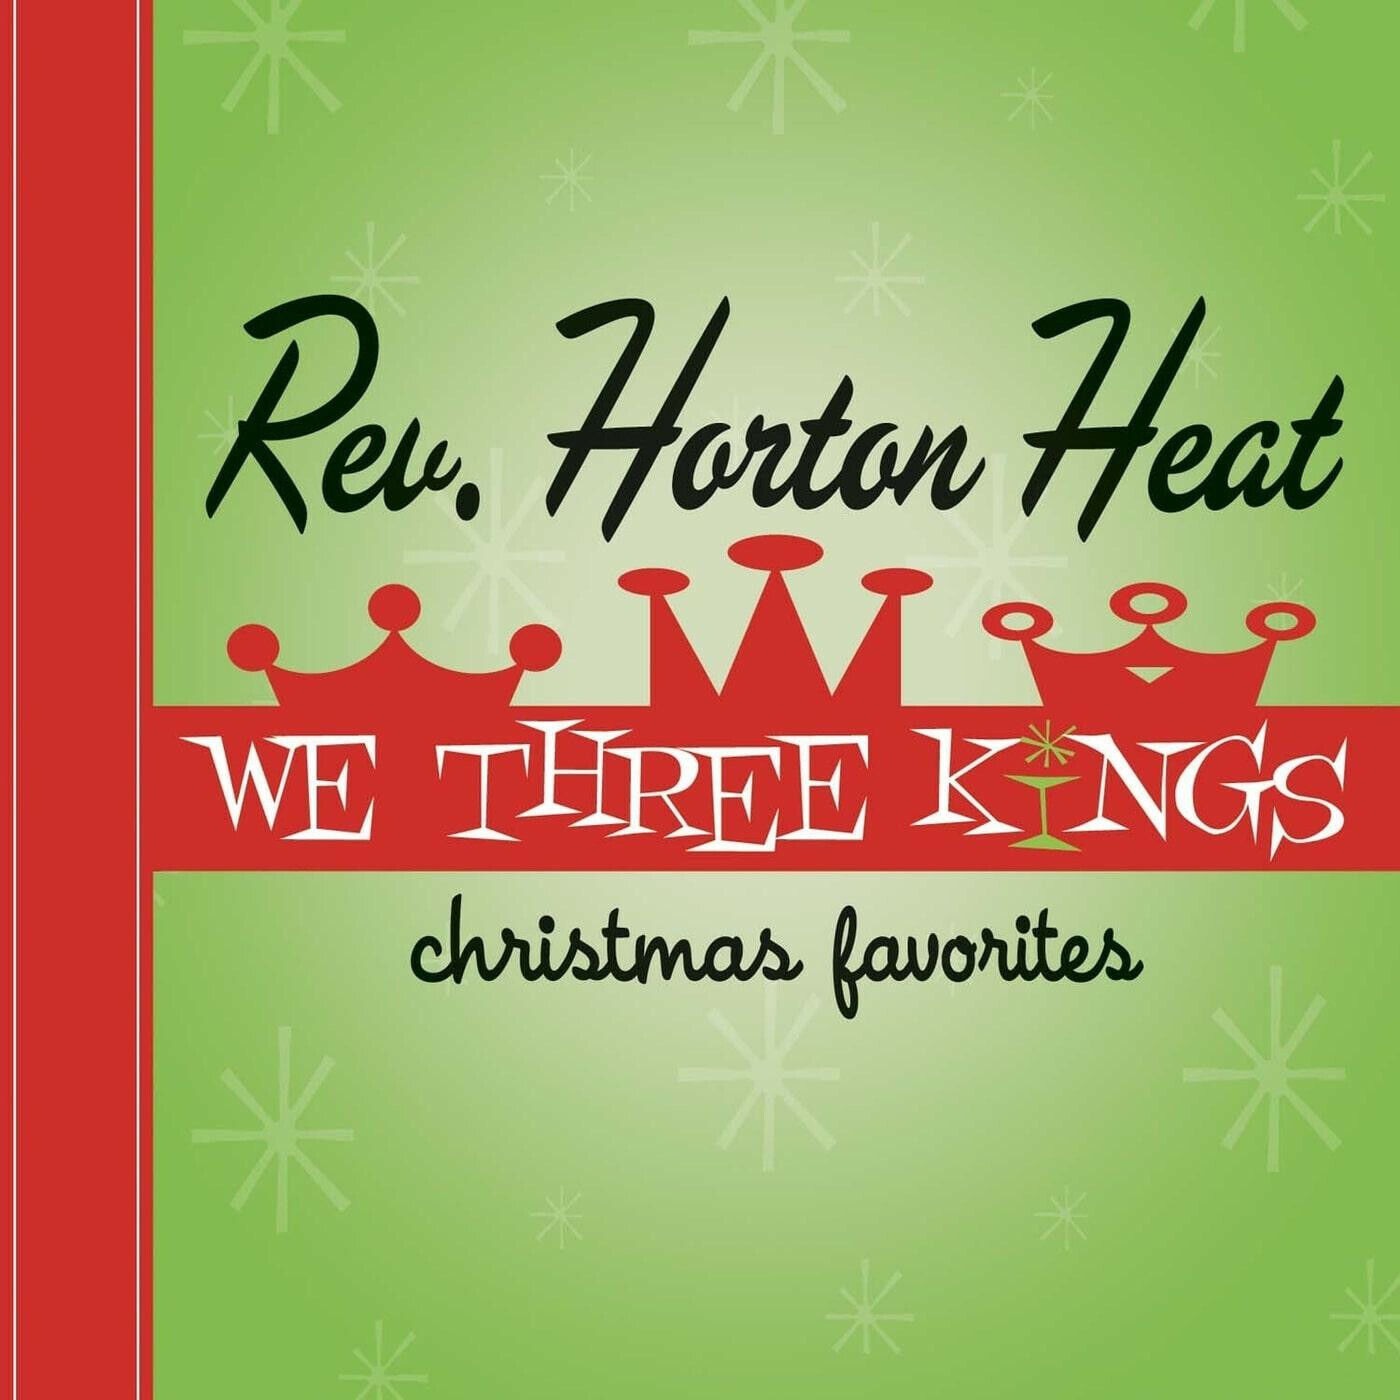 The Reverend Horton Heat "We Three Kings" LP